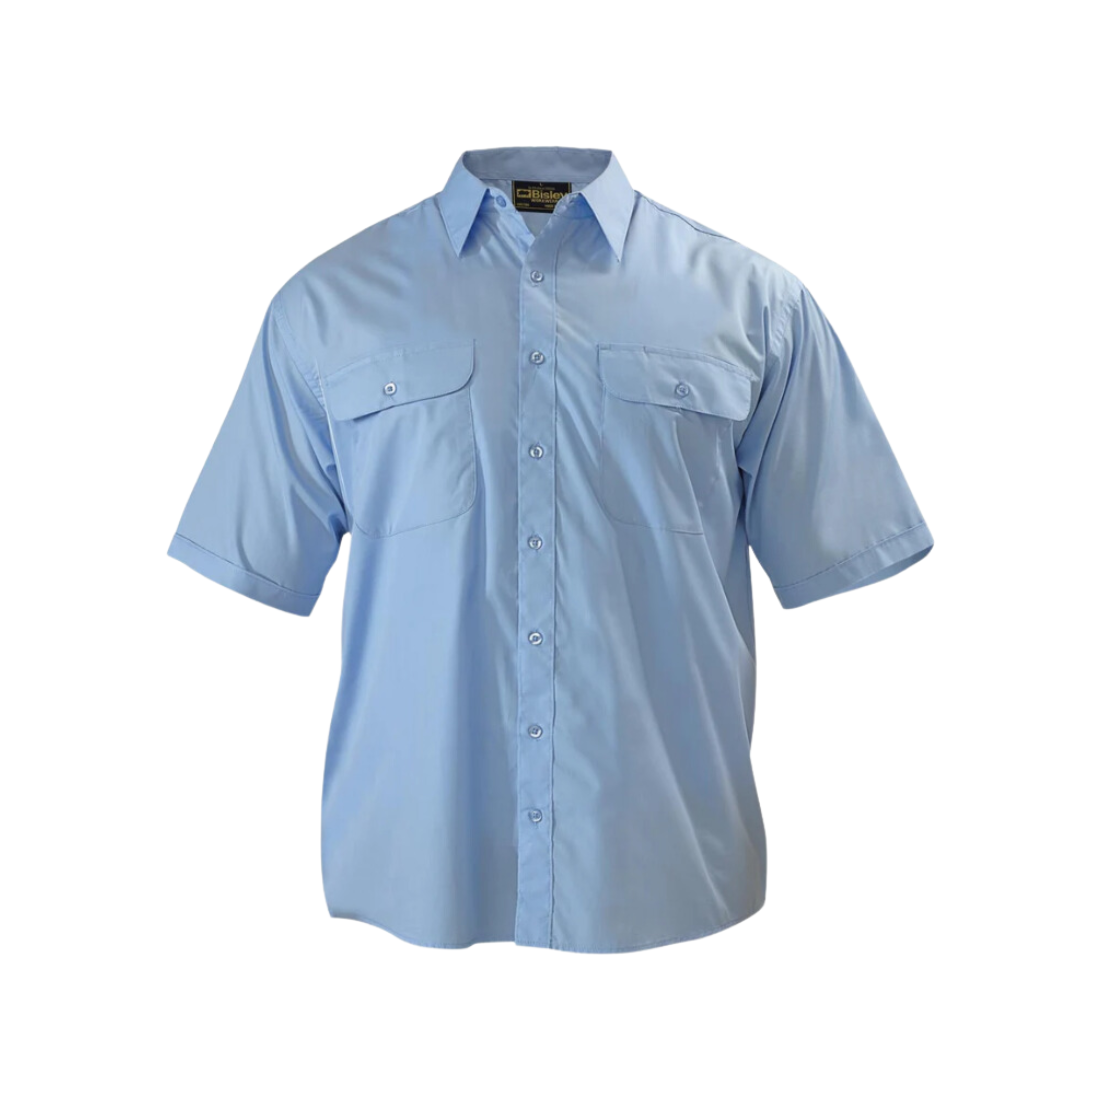 Permanent Press Shirt - Short Sleeve S Sky Blue Workwear by Bisley | The Bloke Shop